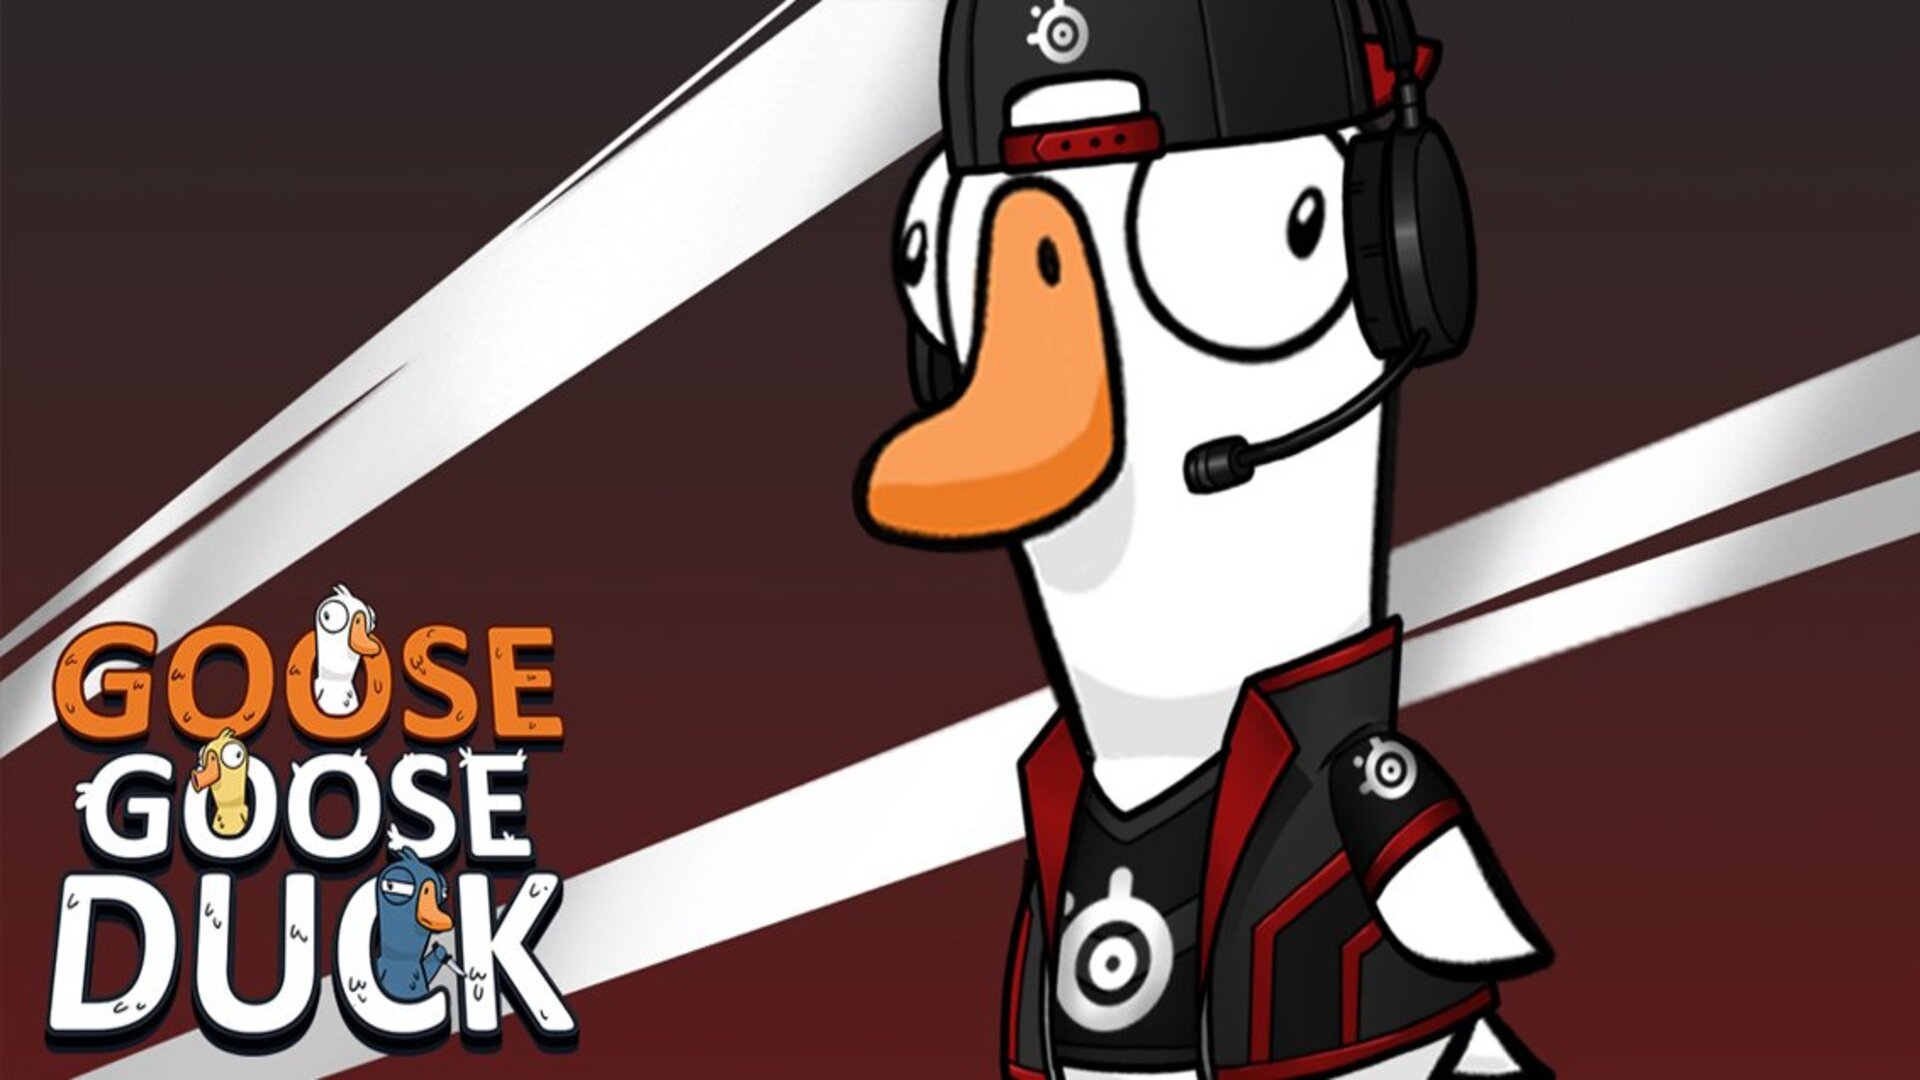 Goose Goose Duck - Steelseries Outfit Pack Digital Download CD Key, 3.79$